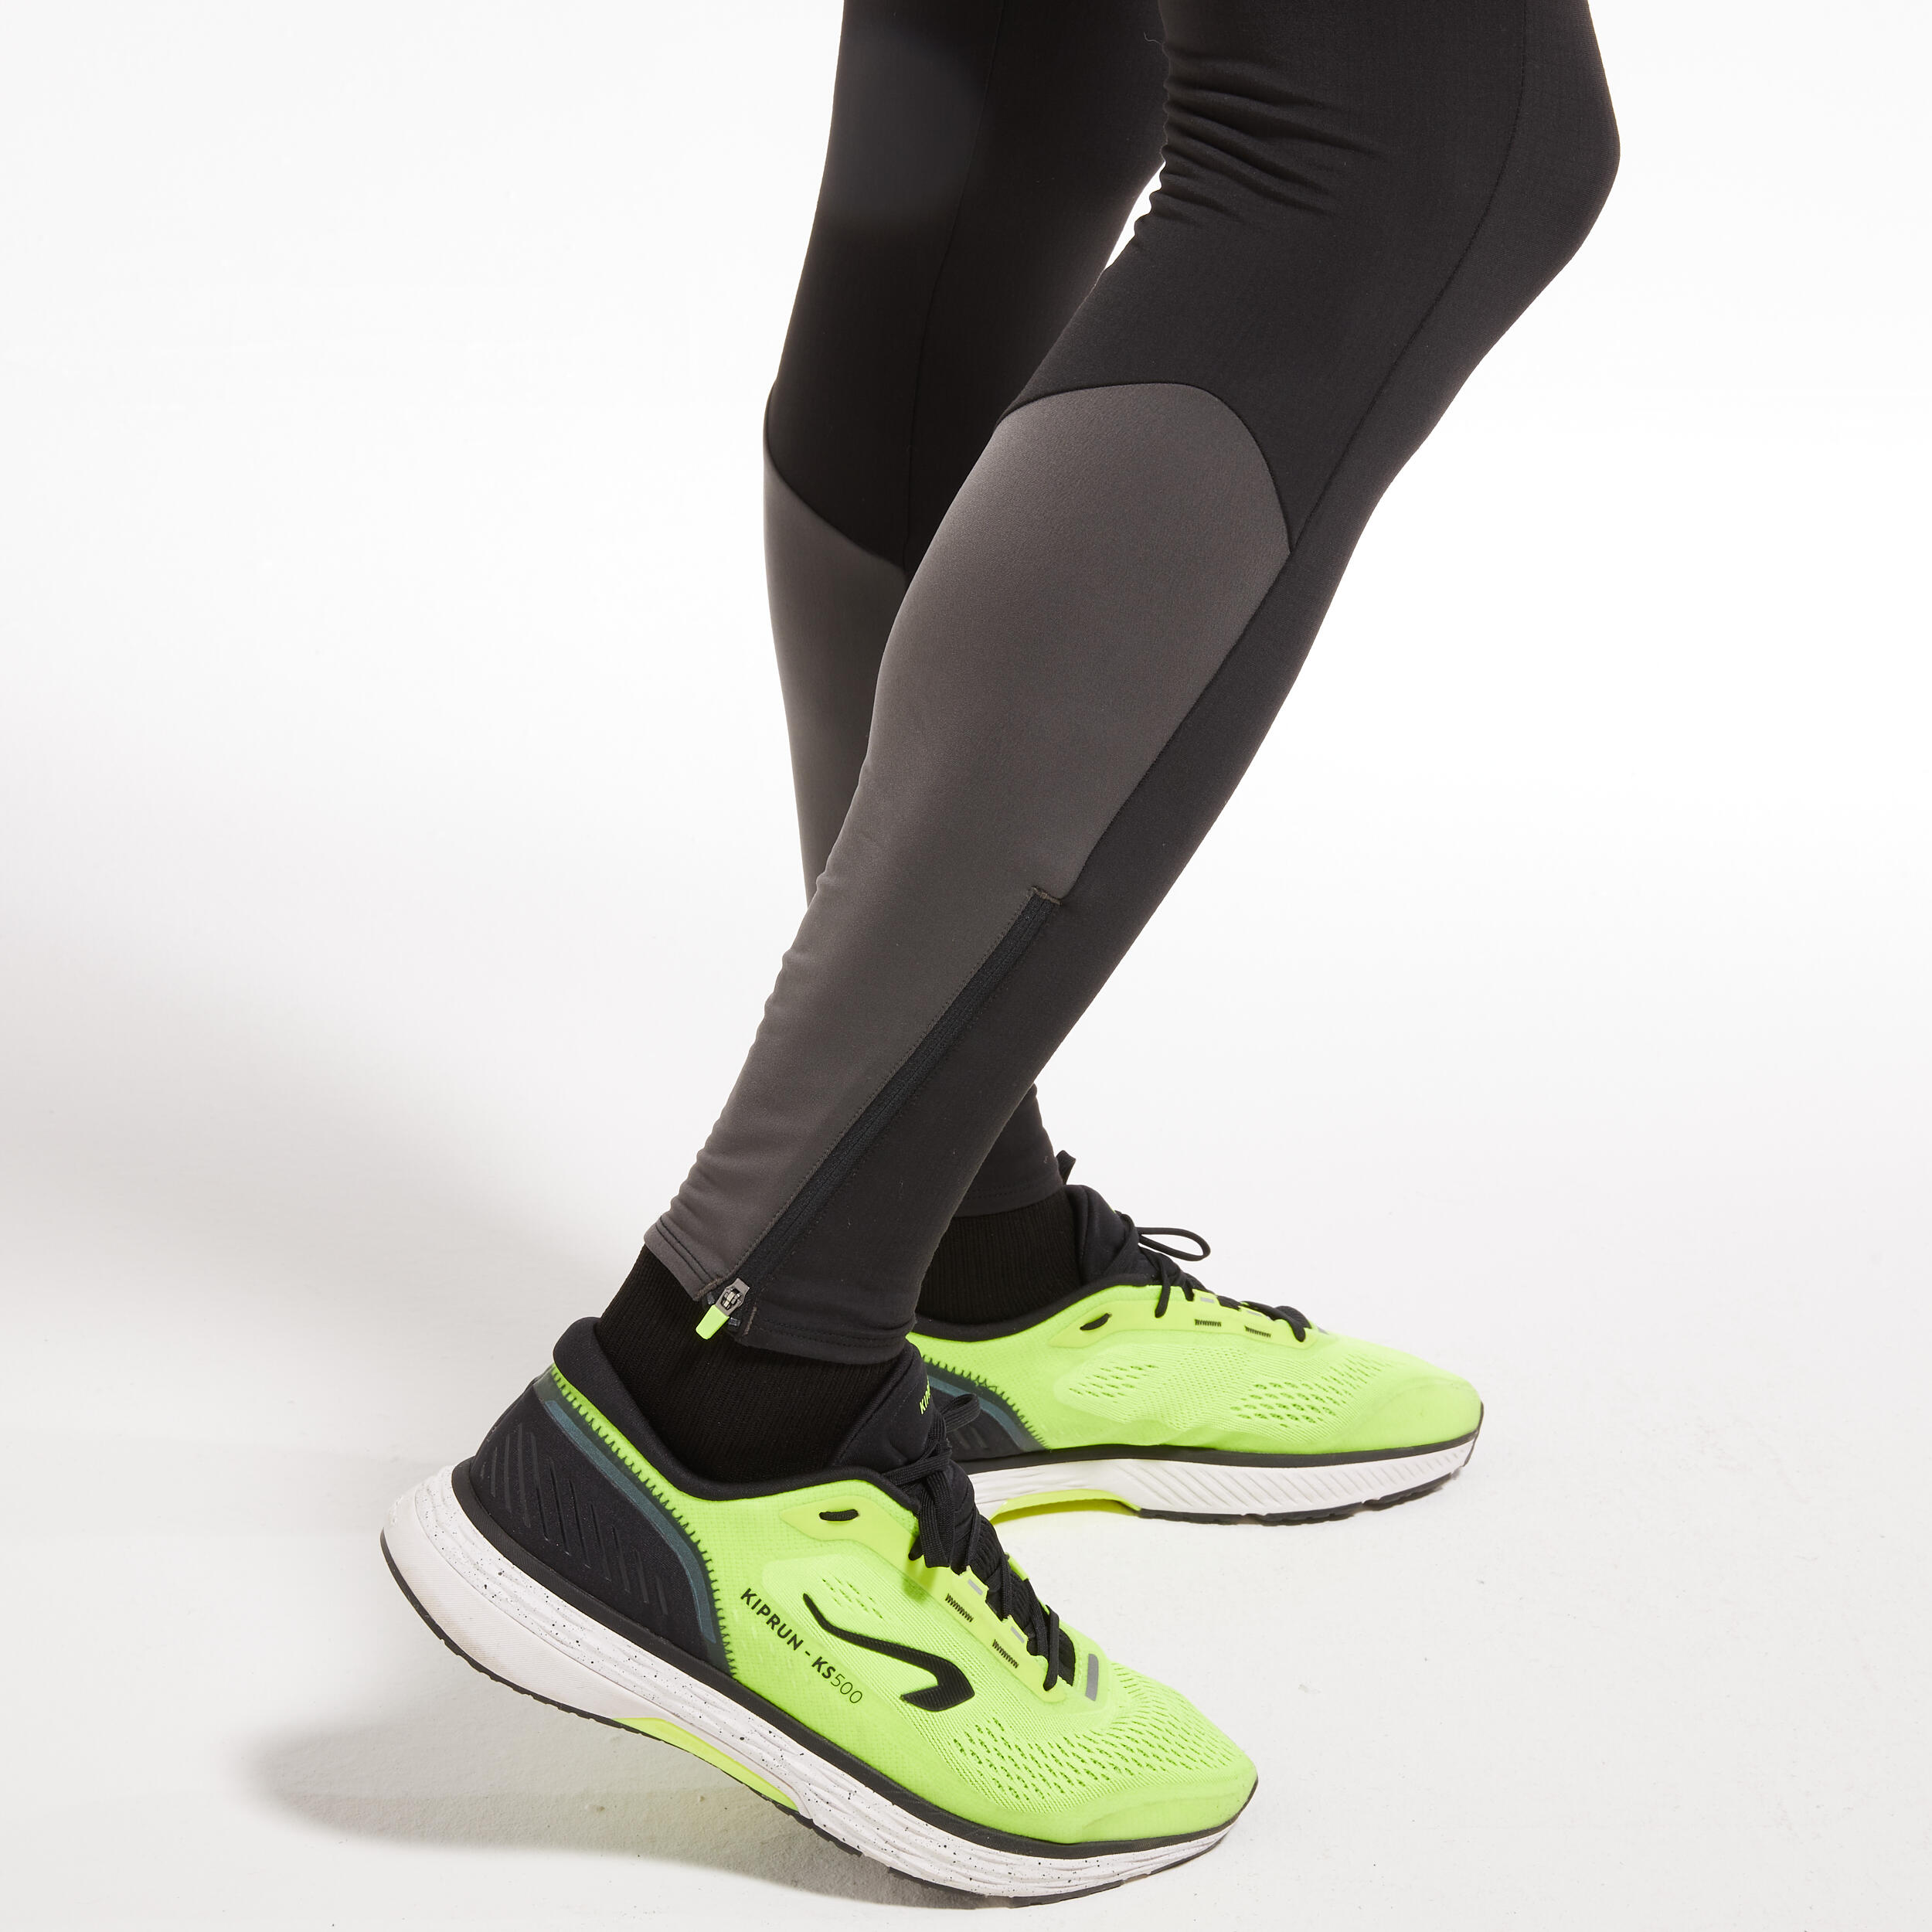 Underwear & Socks, Decathlon Breathable Running Tights